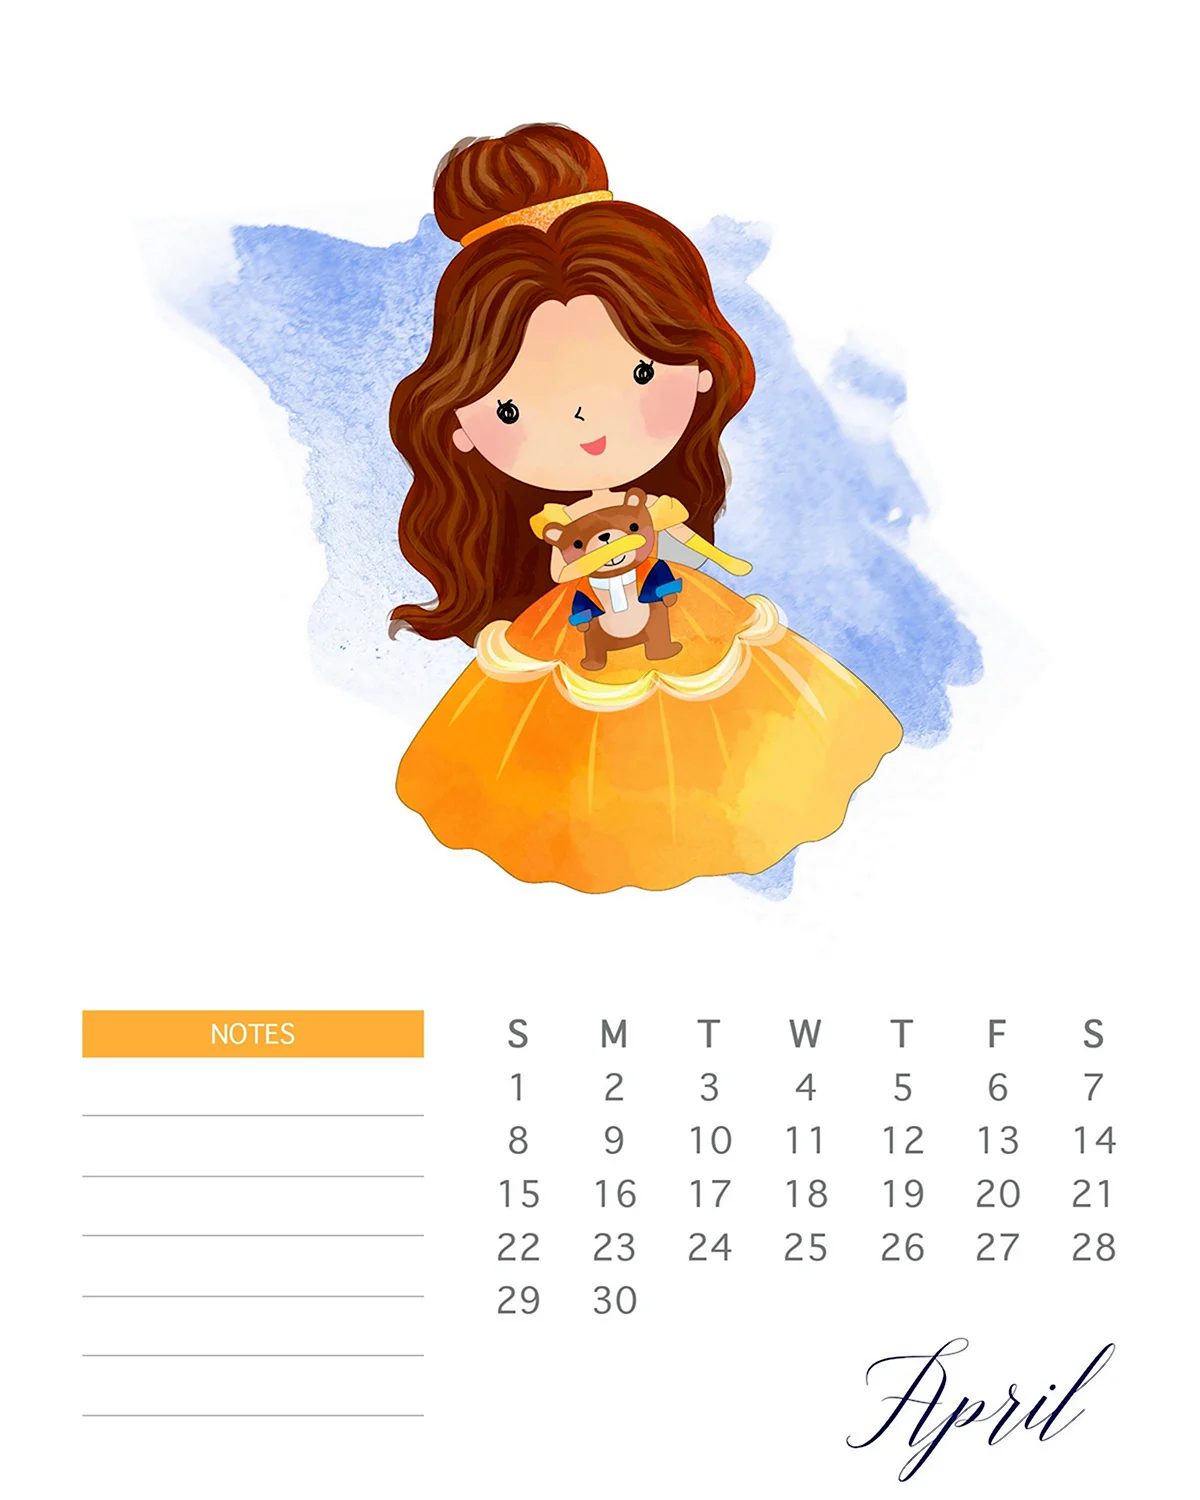 Календарь иллюстрация